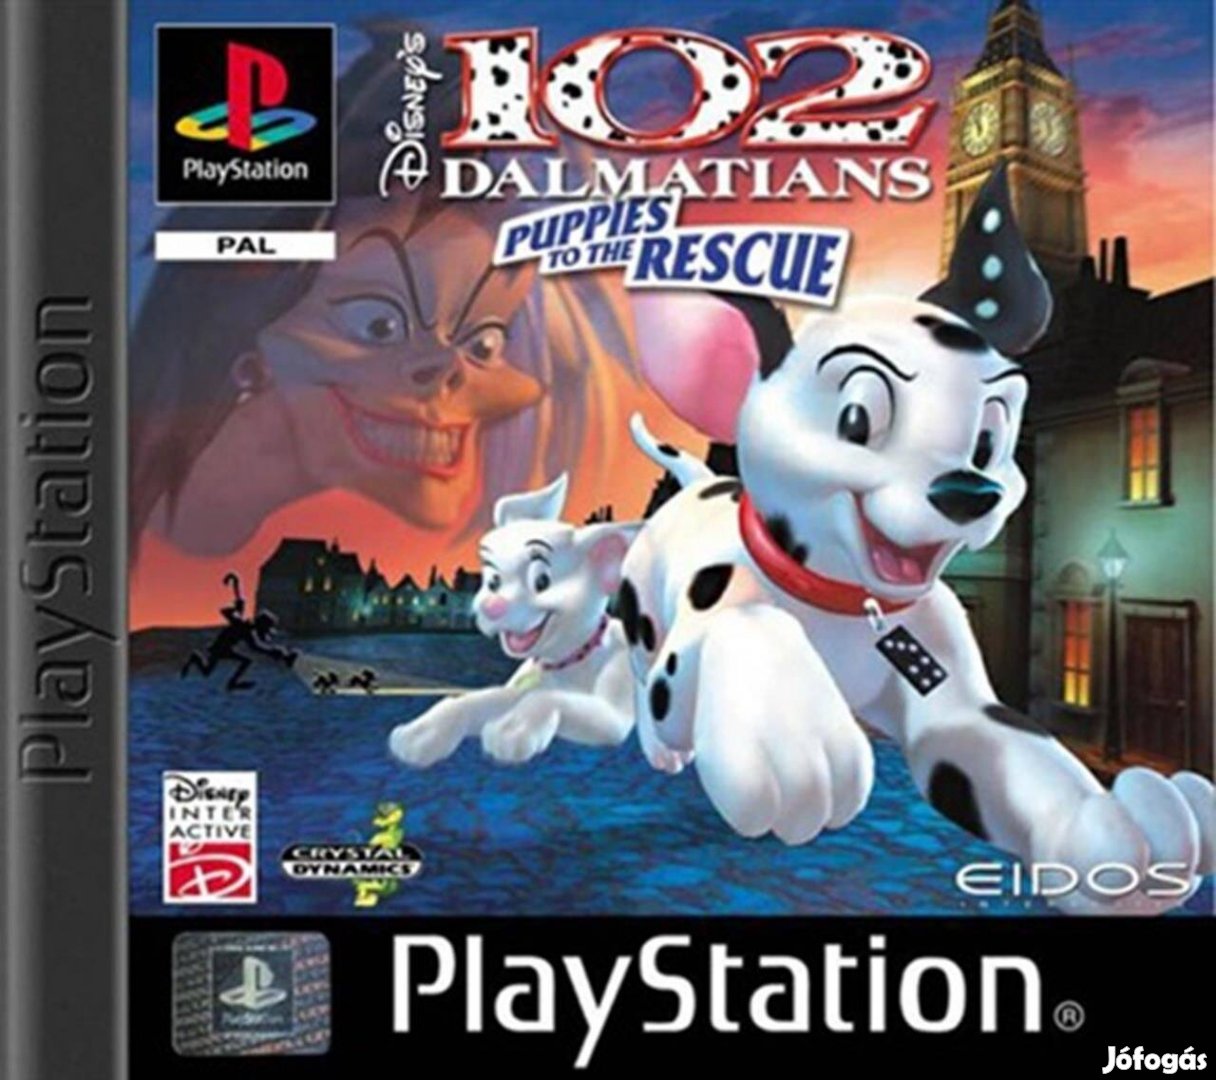 102 Dalmatians (Disney's) Puppies to the Rescue, Boxed PS1 játék